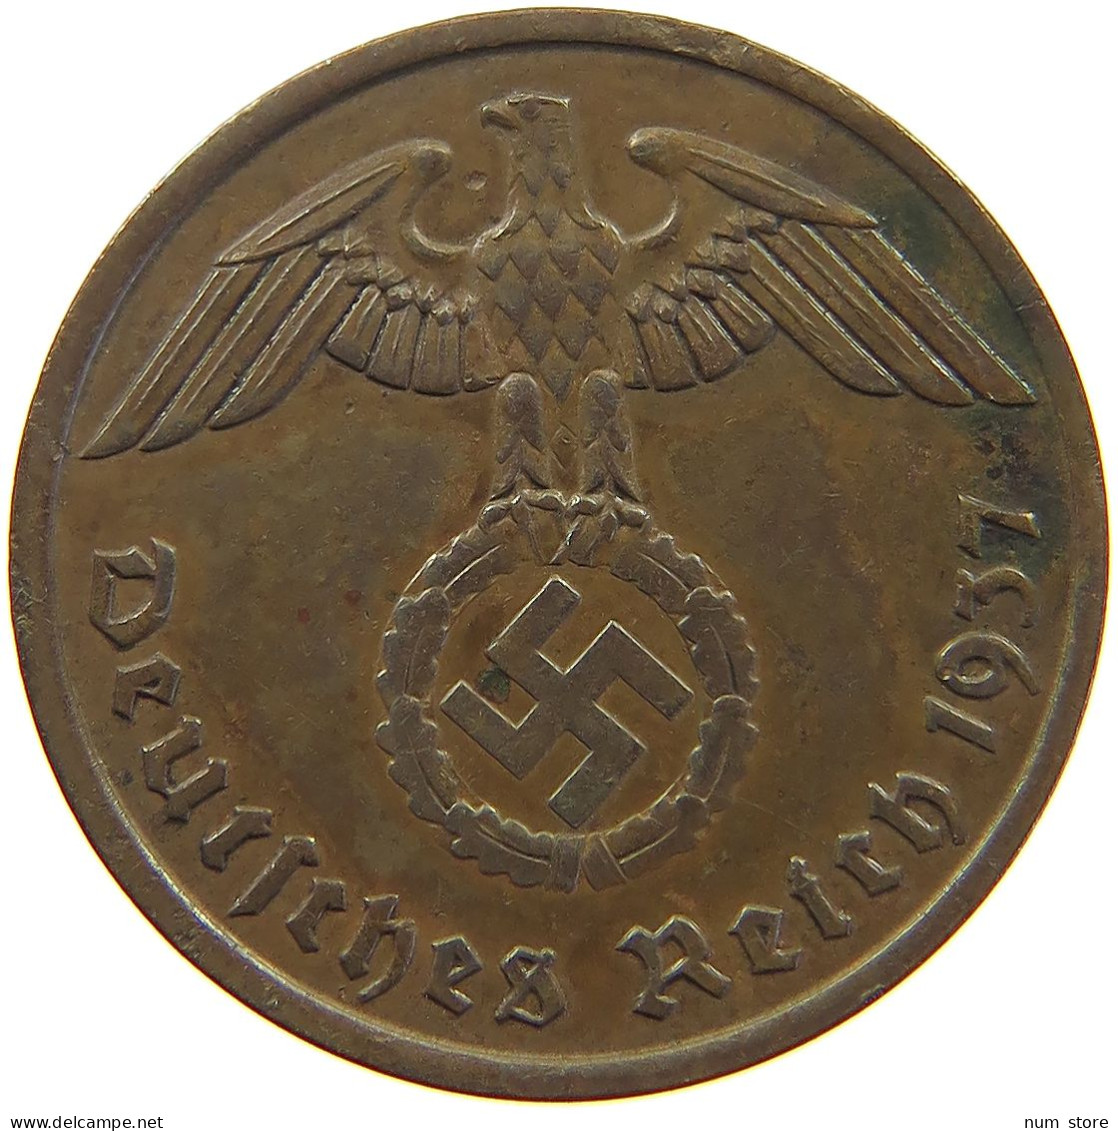 GERMANY 2 PFENNIG 1937 A #c082 0459 - 2 Reichspfennig